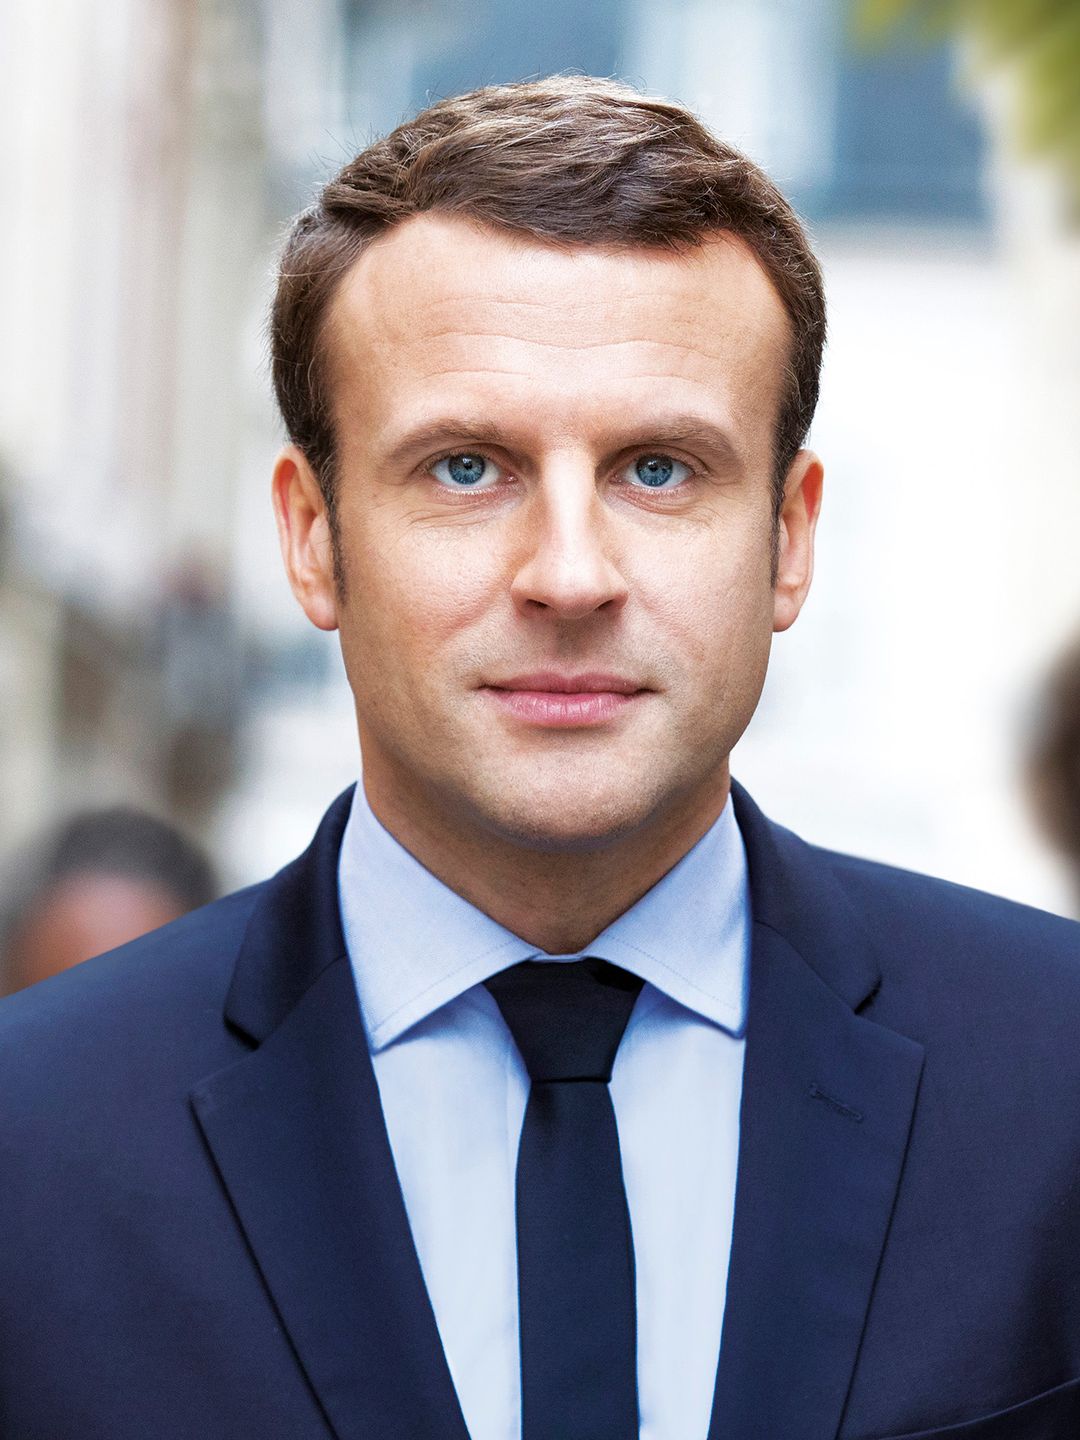 Emmanuel Macron in real life